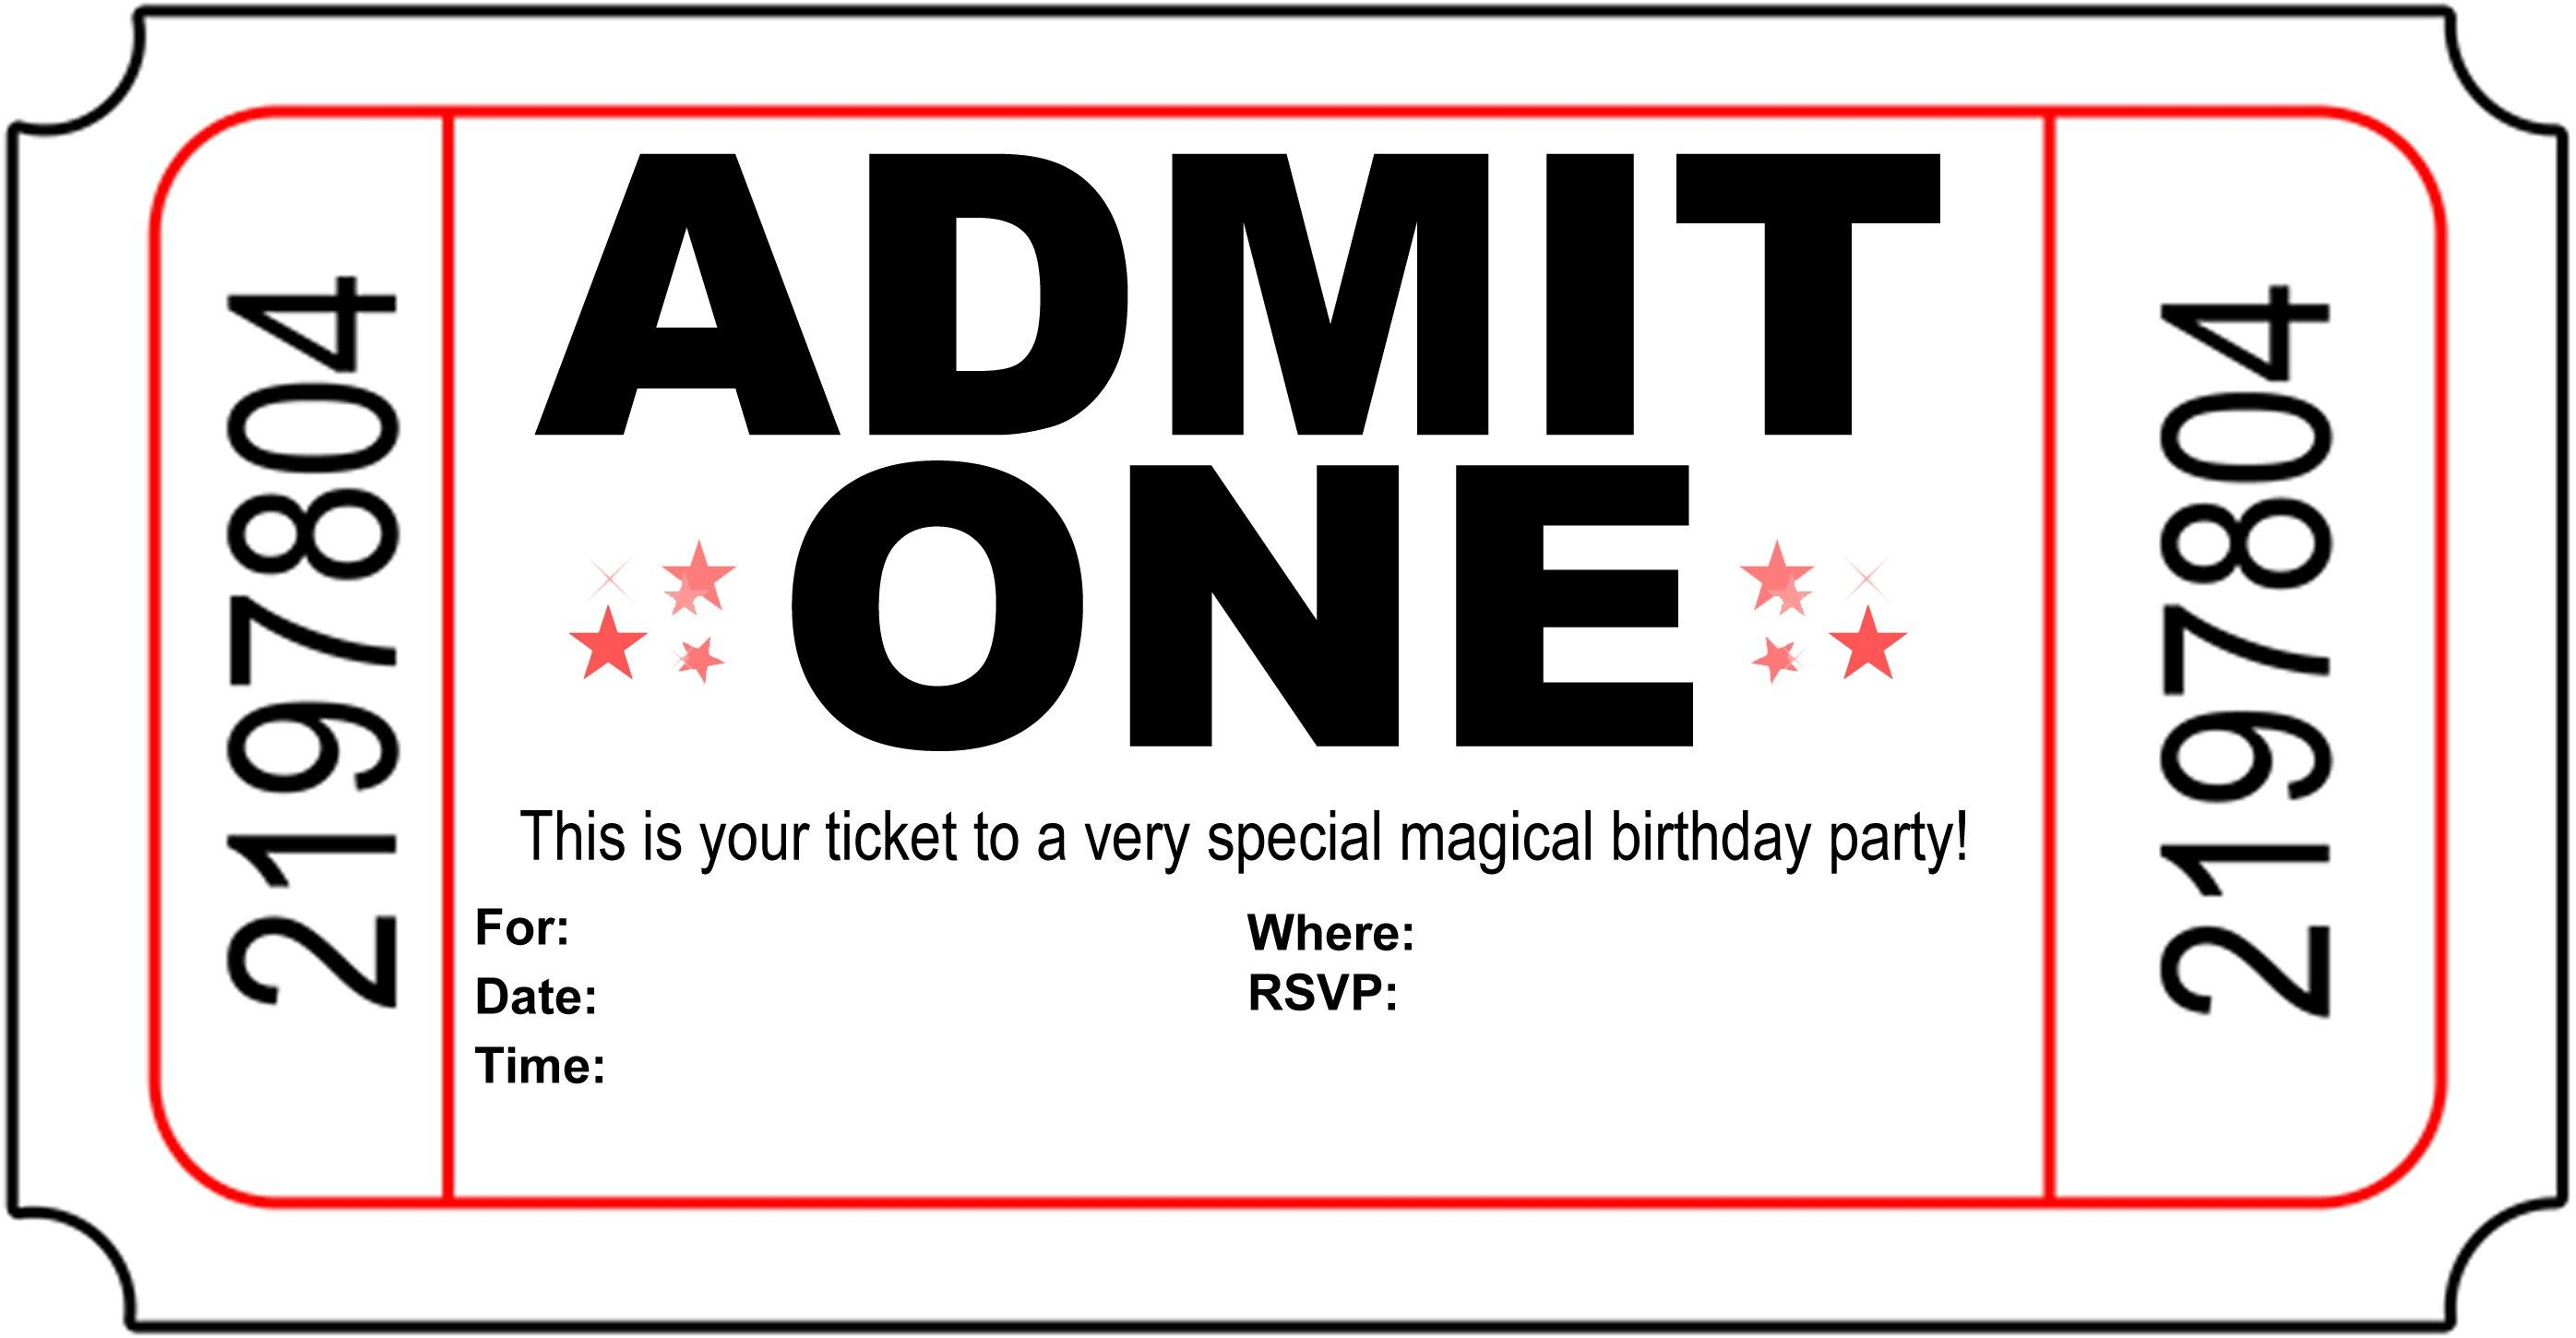 Birthday Party Invitation Free Printable | Printshop. | Pinterest - Movie Birthday Party Invitations Free Printable